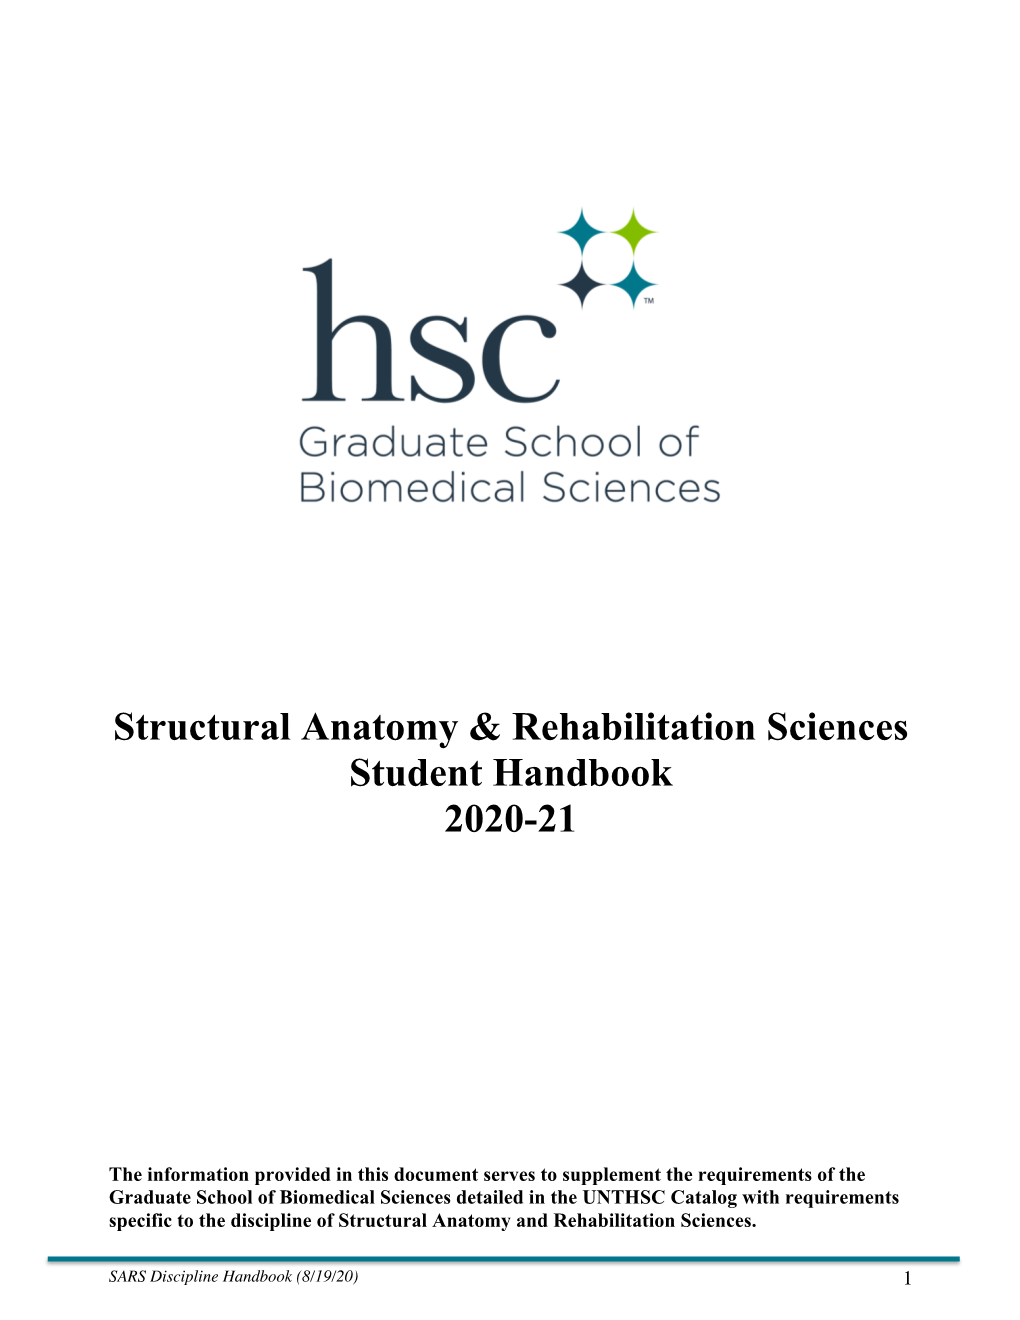 Structural Anatomy & Rehabilitation Sciences Student Handbook 2020-21